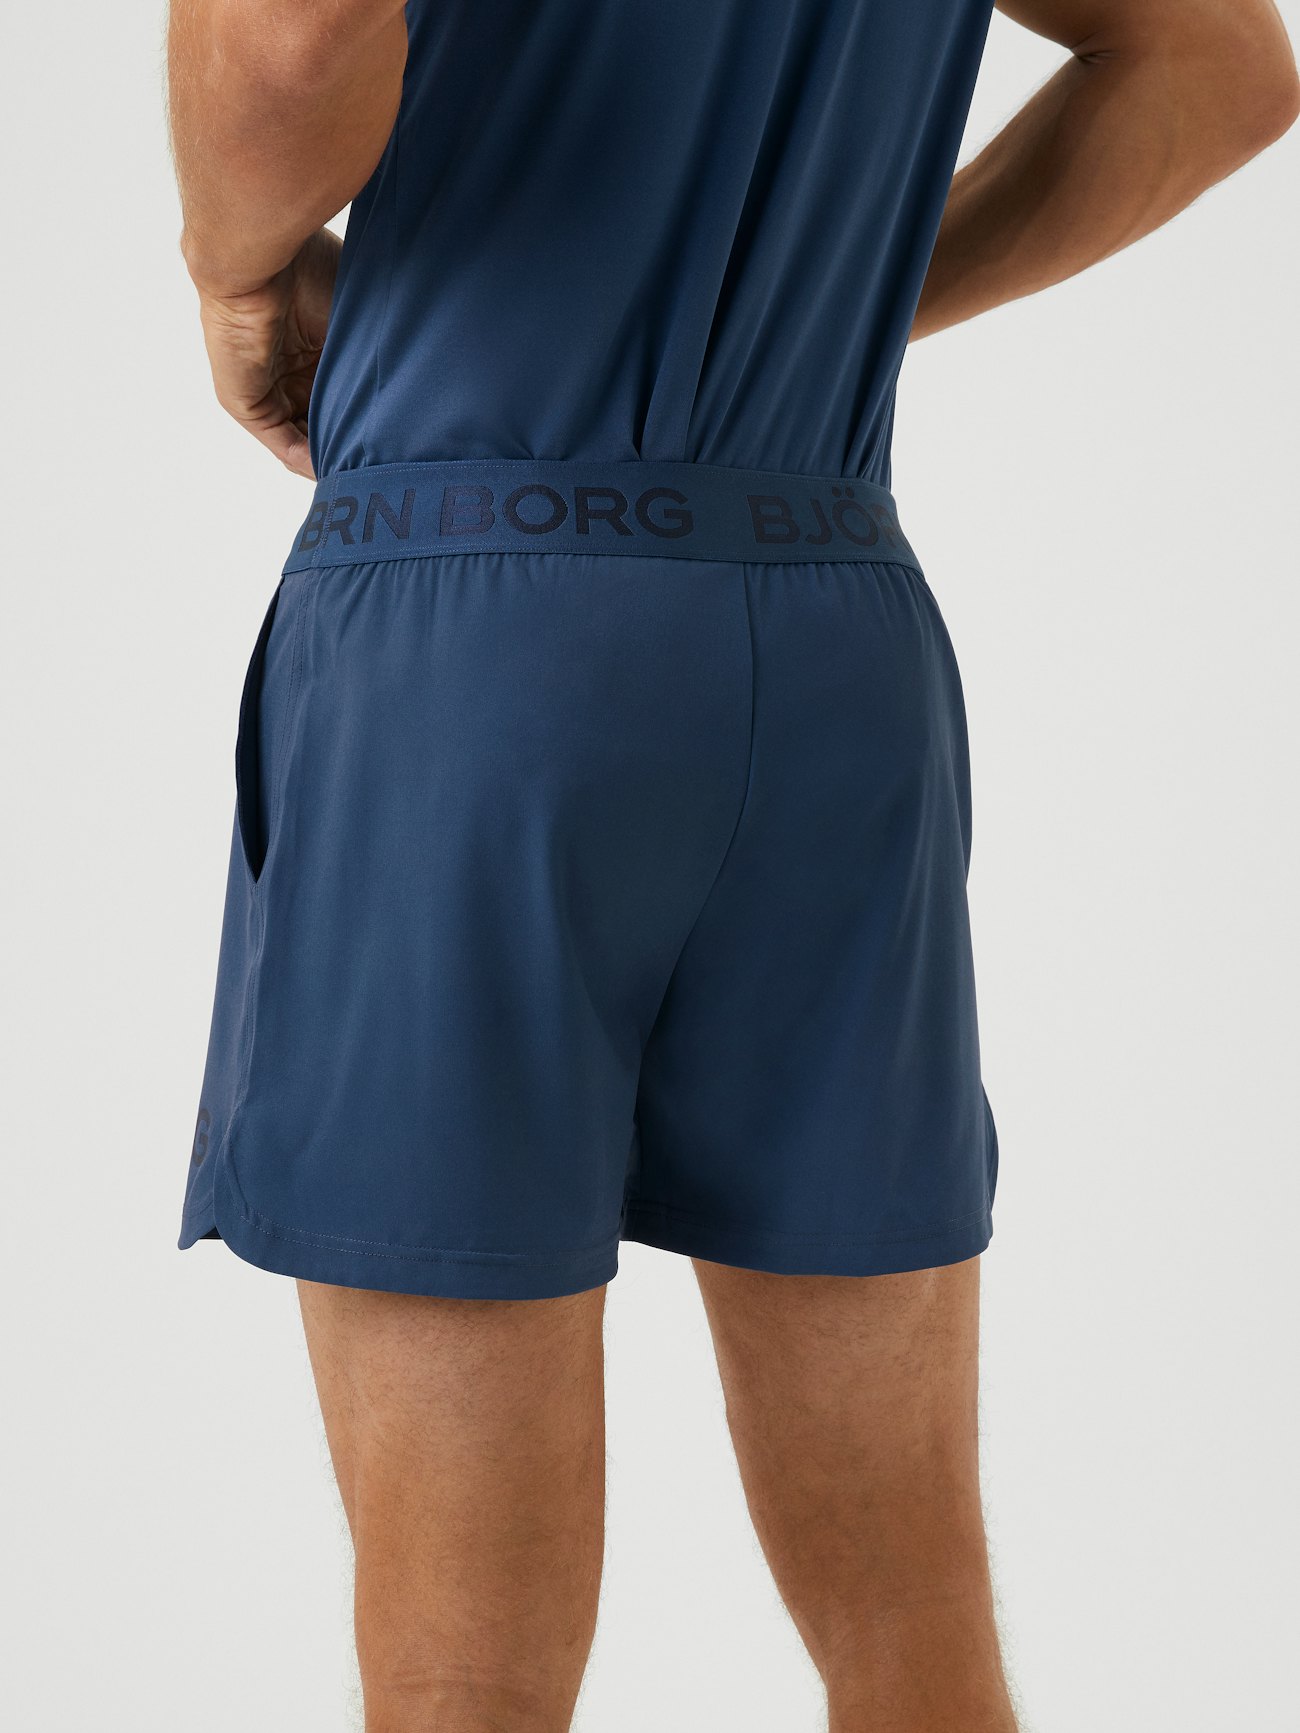 Bjorn Borg Cotton Stretch Men Underwear Trunk Blue Sea Wave size L XL